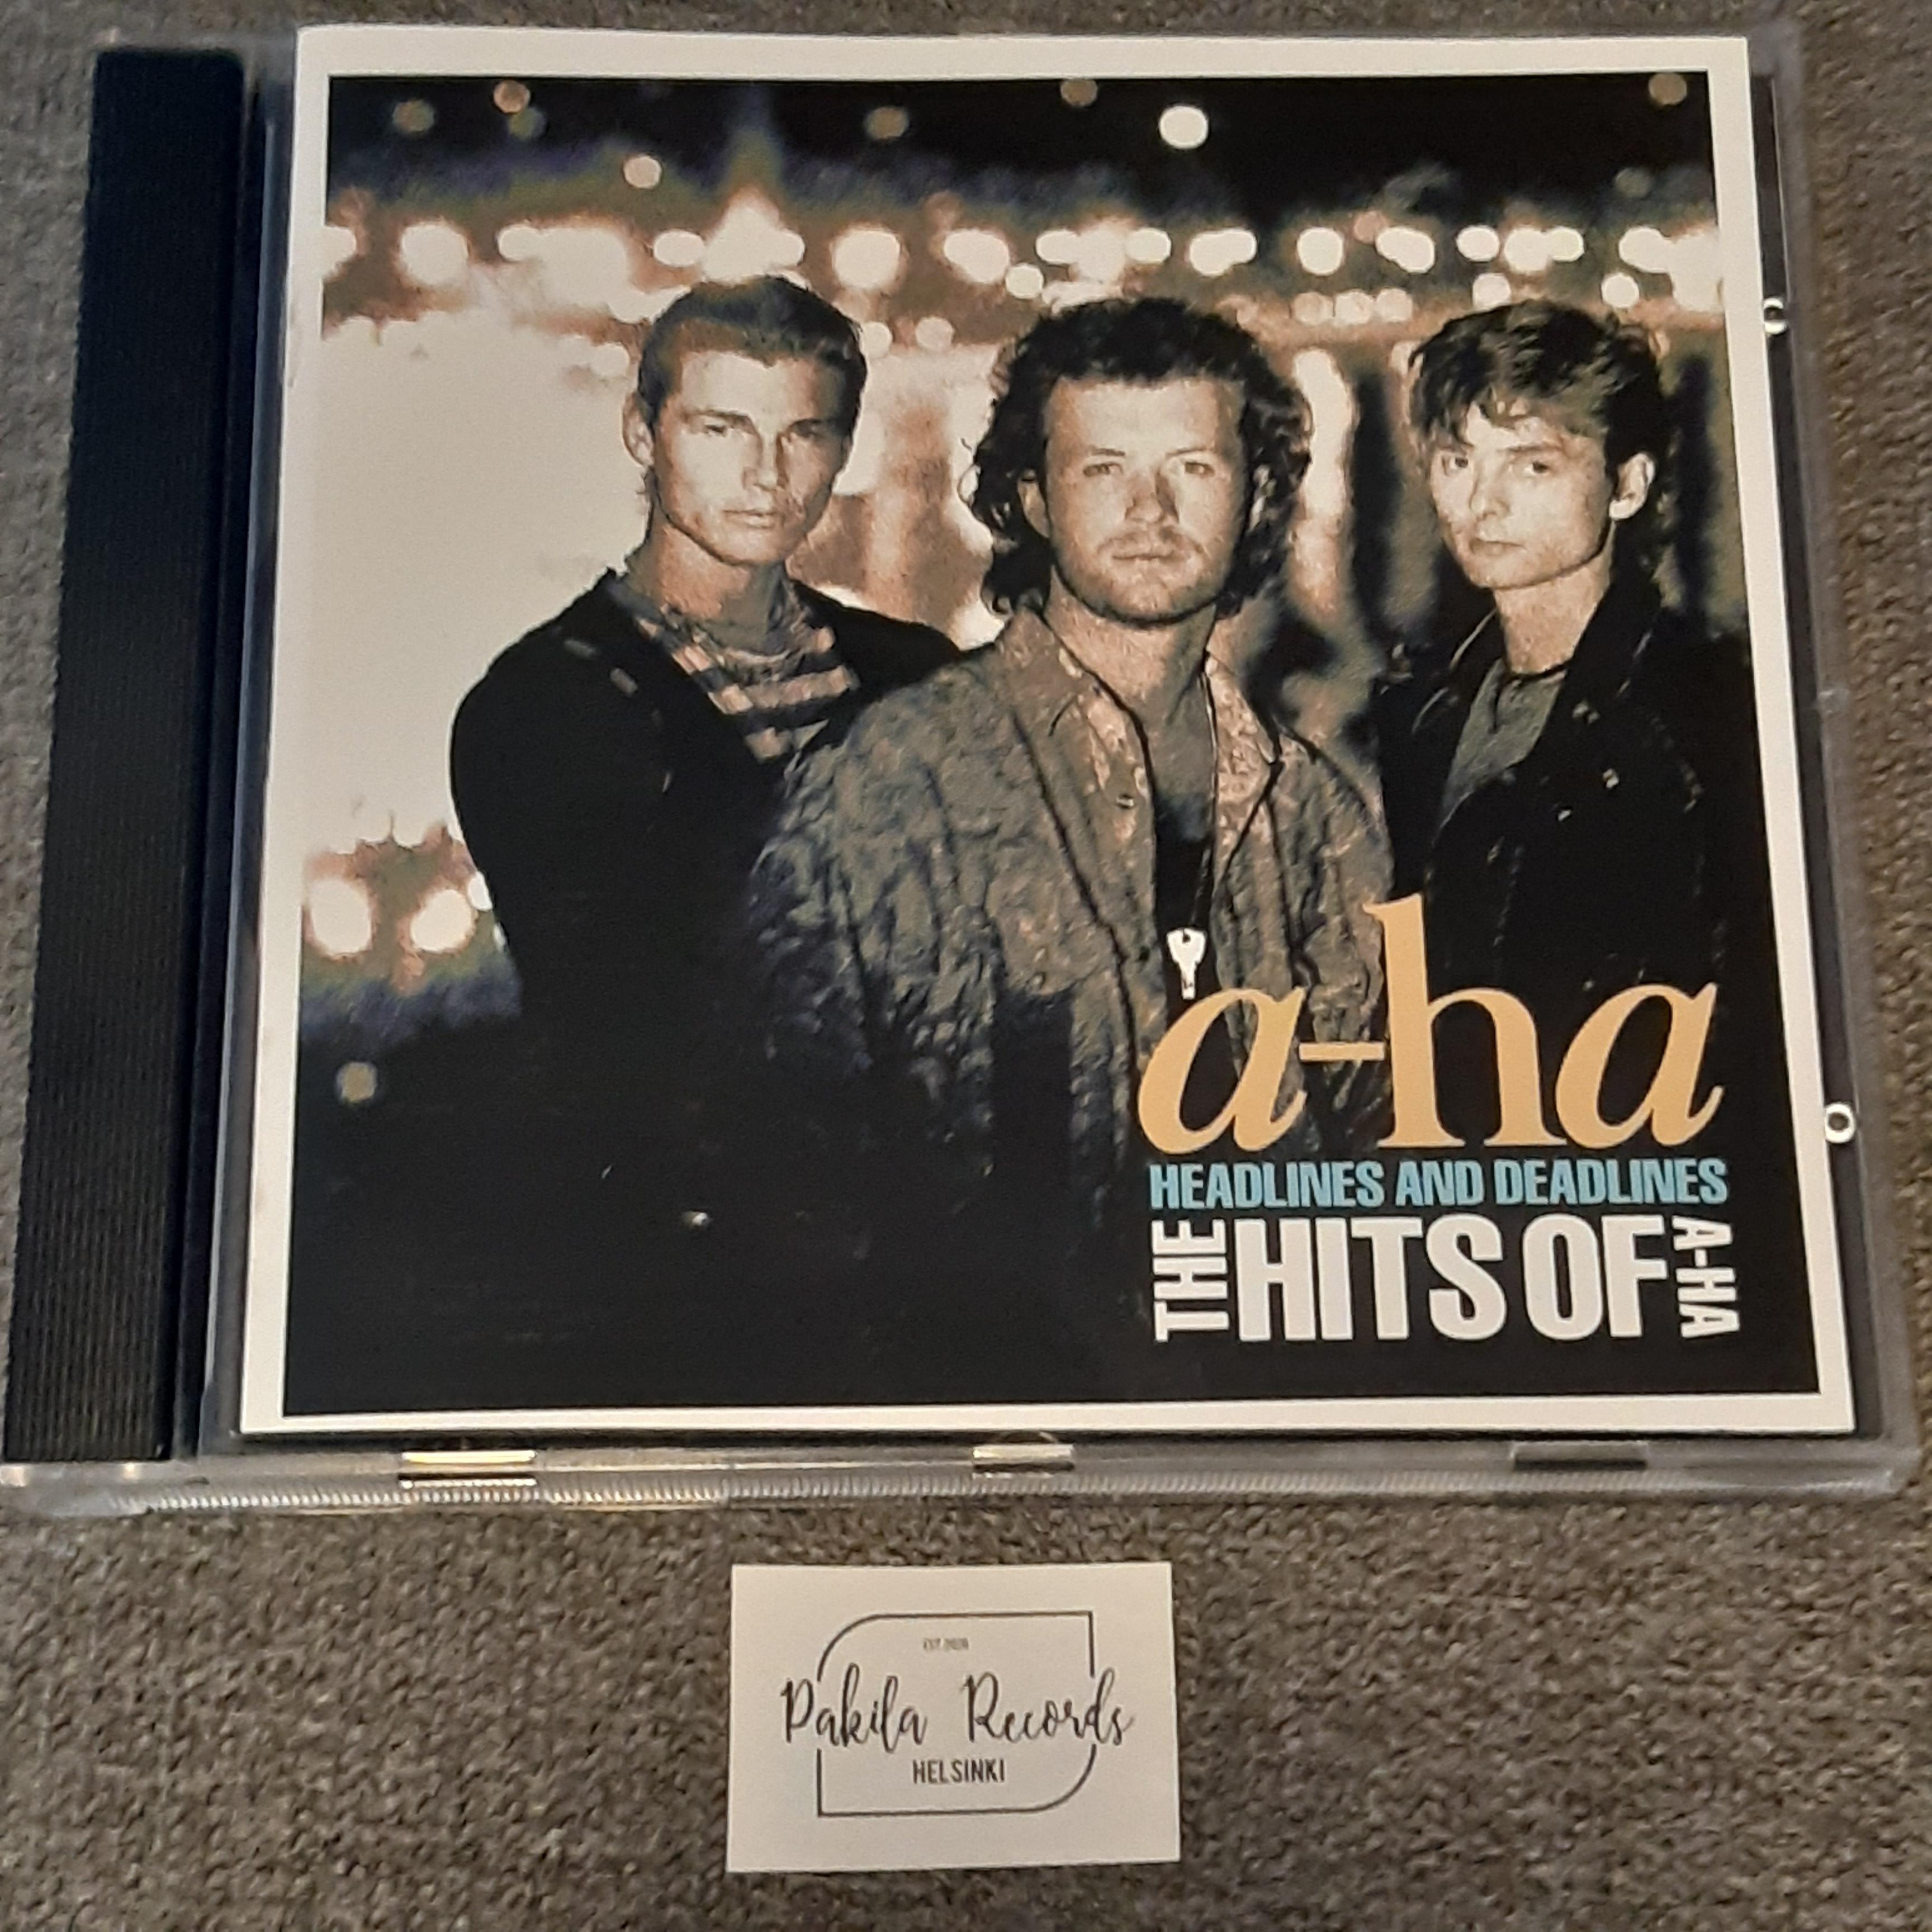 A-ha - Headlines And Deadlines, The Hits Of A-ha - CD (käytetty)